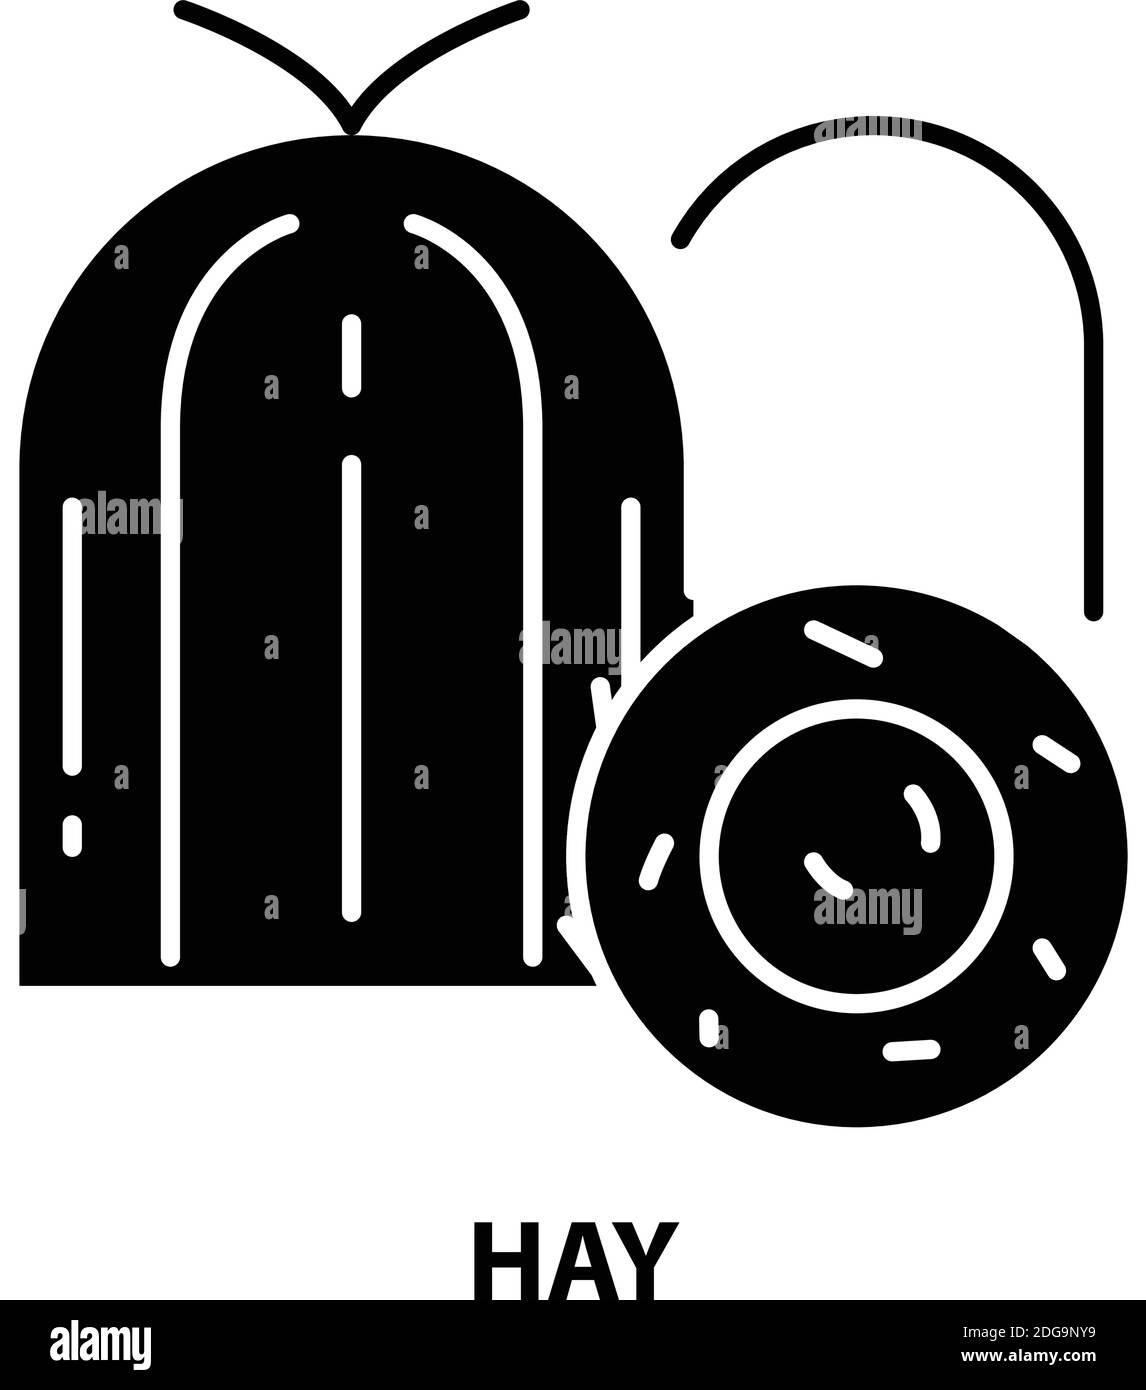 hay icon, black vector sign with editable strokes, concept illustration Stock Vector